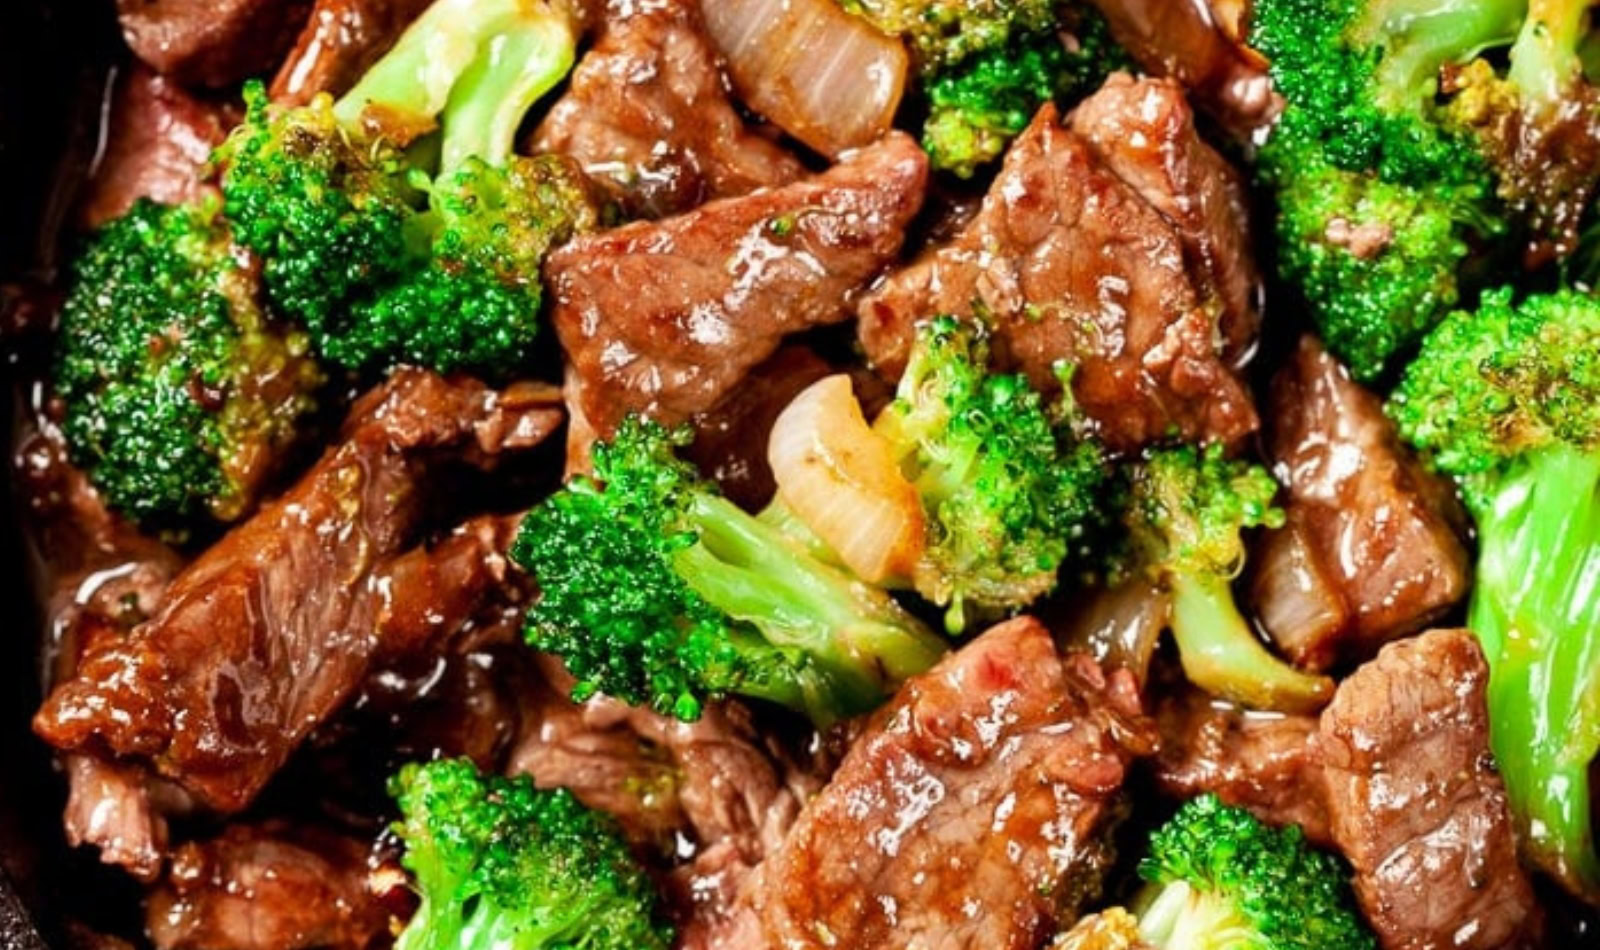 juicy steak bites with broccoli